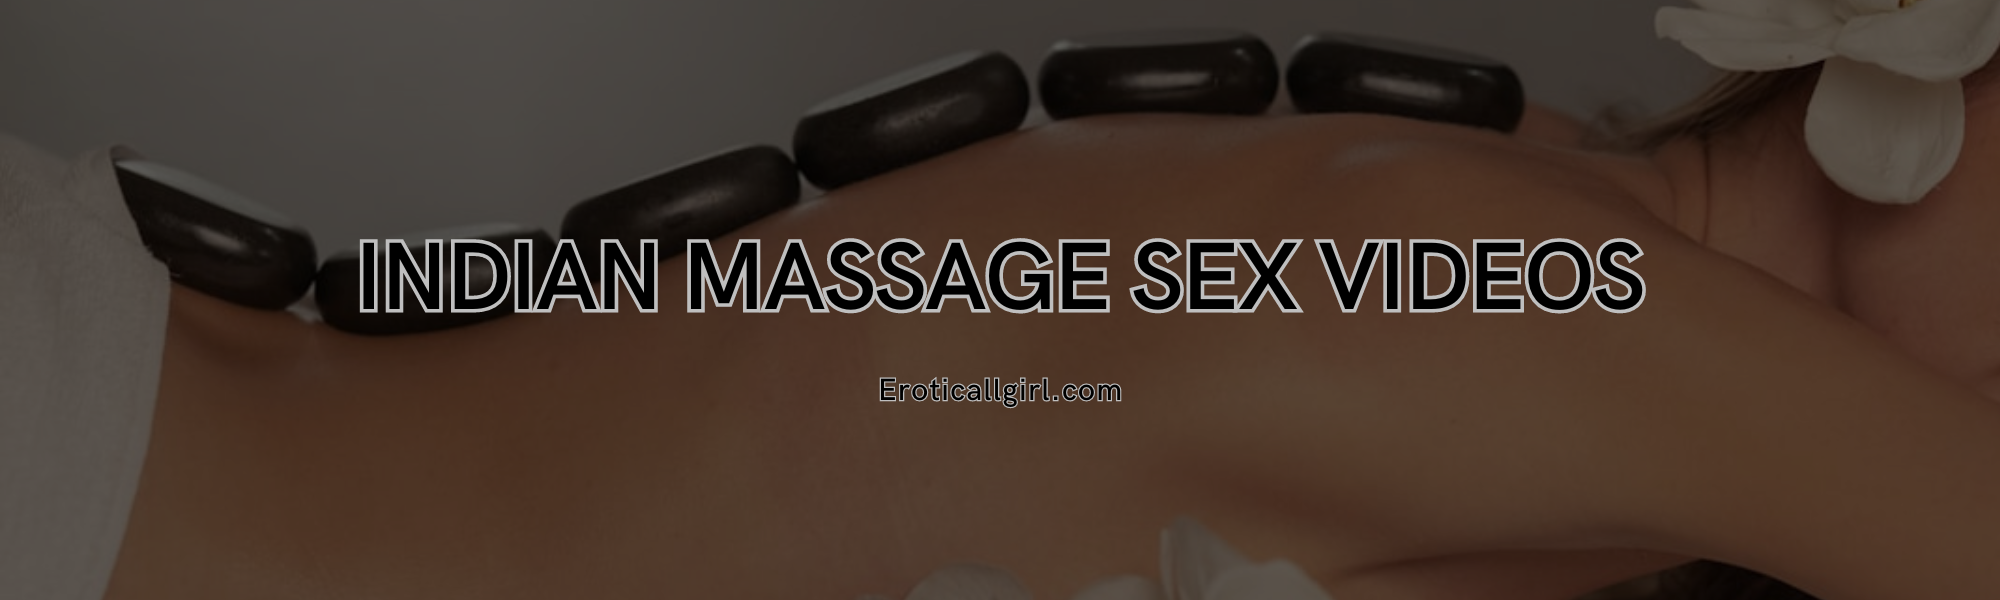 Indian Massage Sex Videos